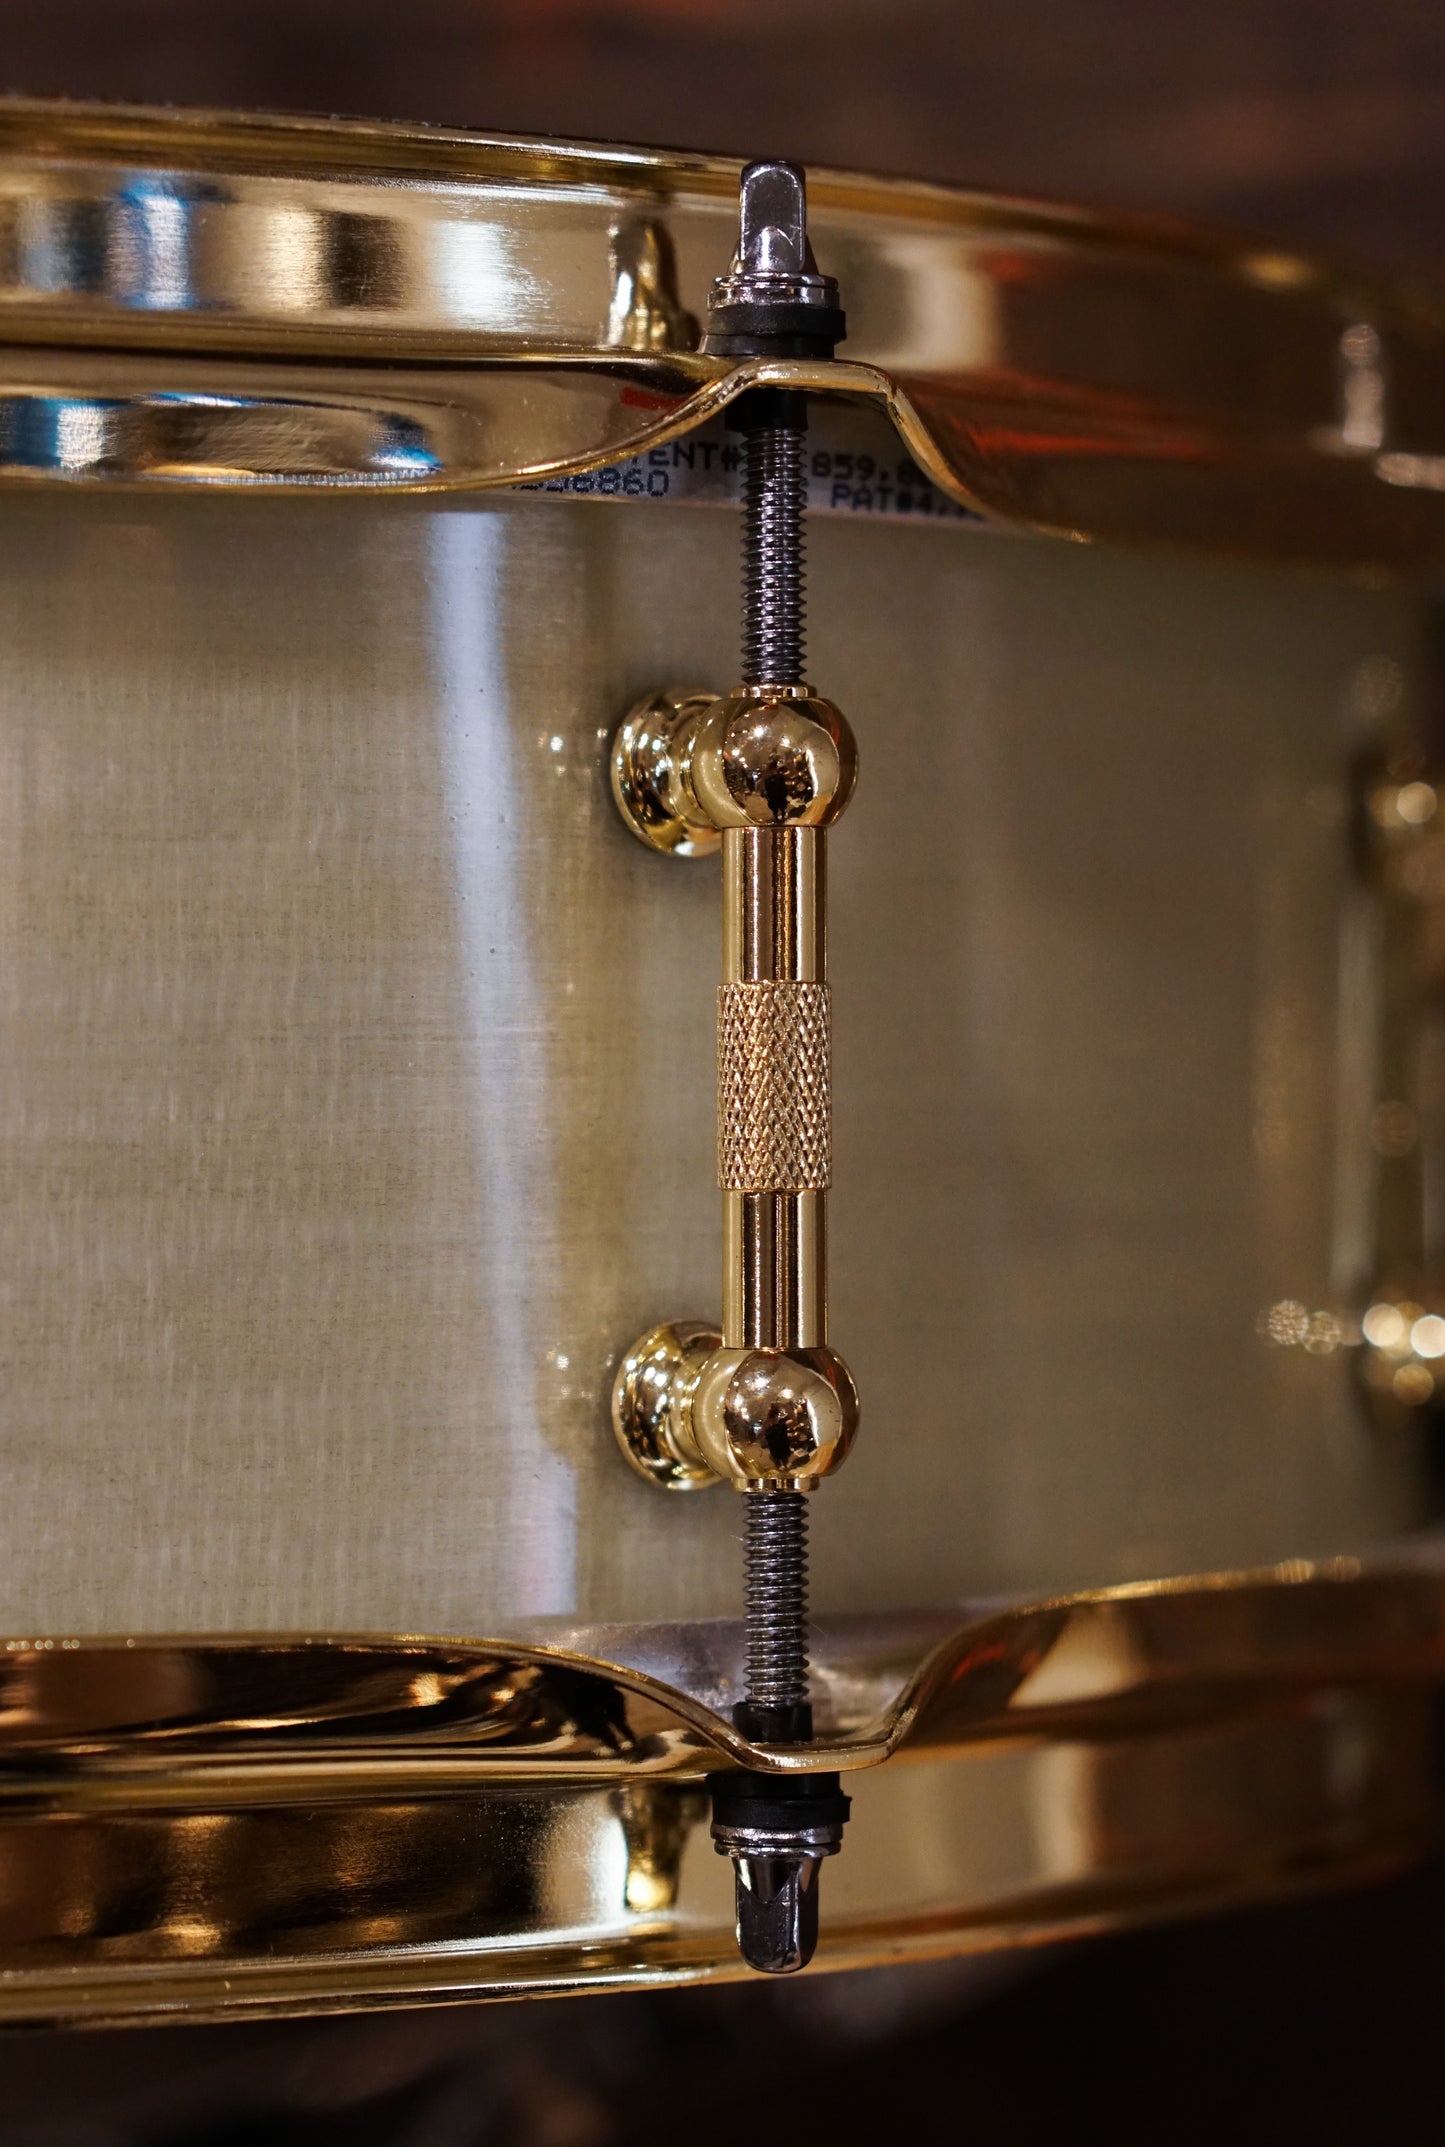 Ming 5x14" Pure Series Fiberglass Snare Drum